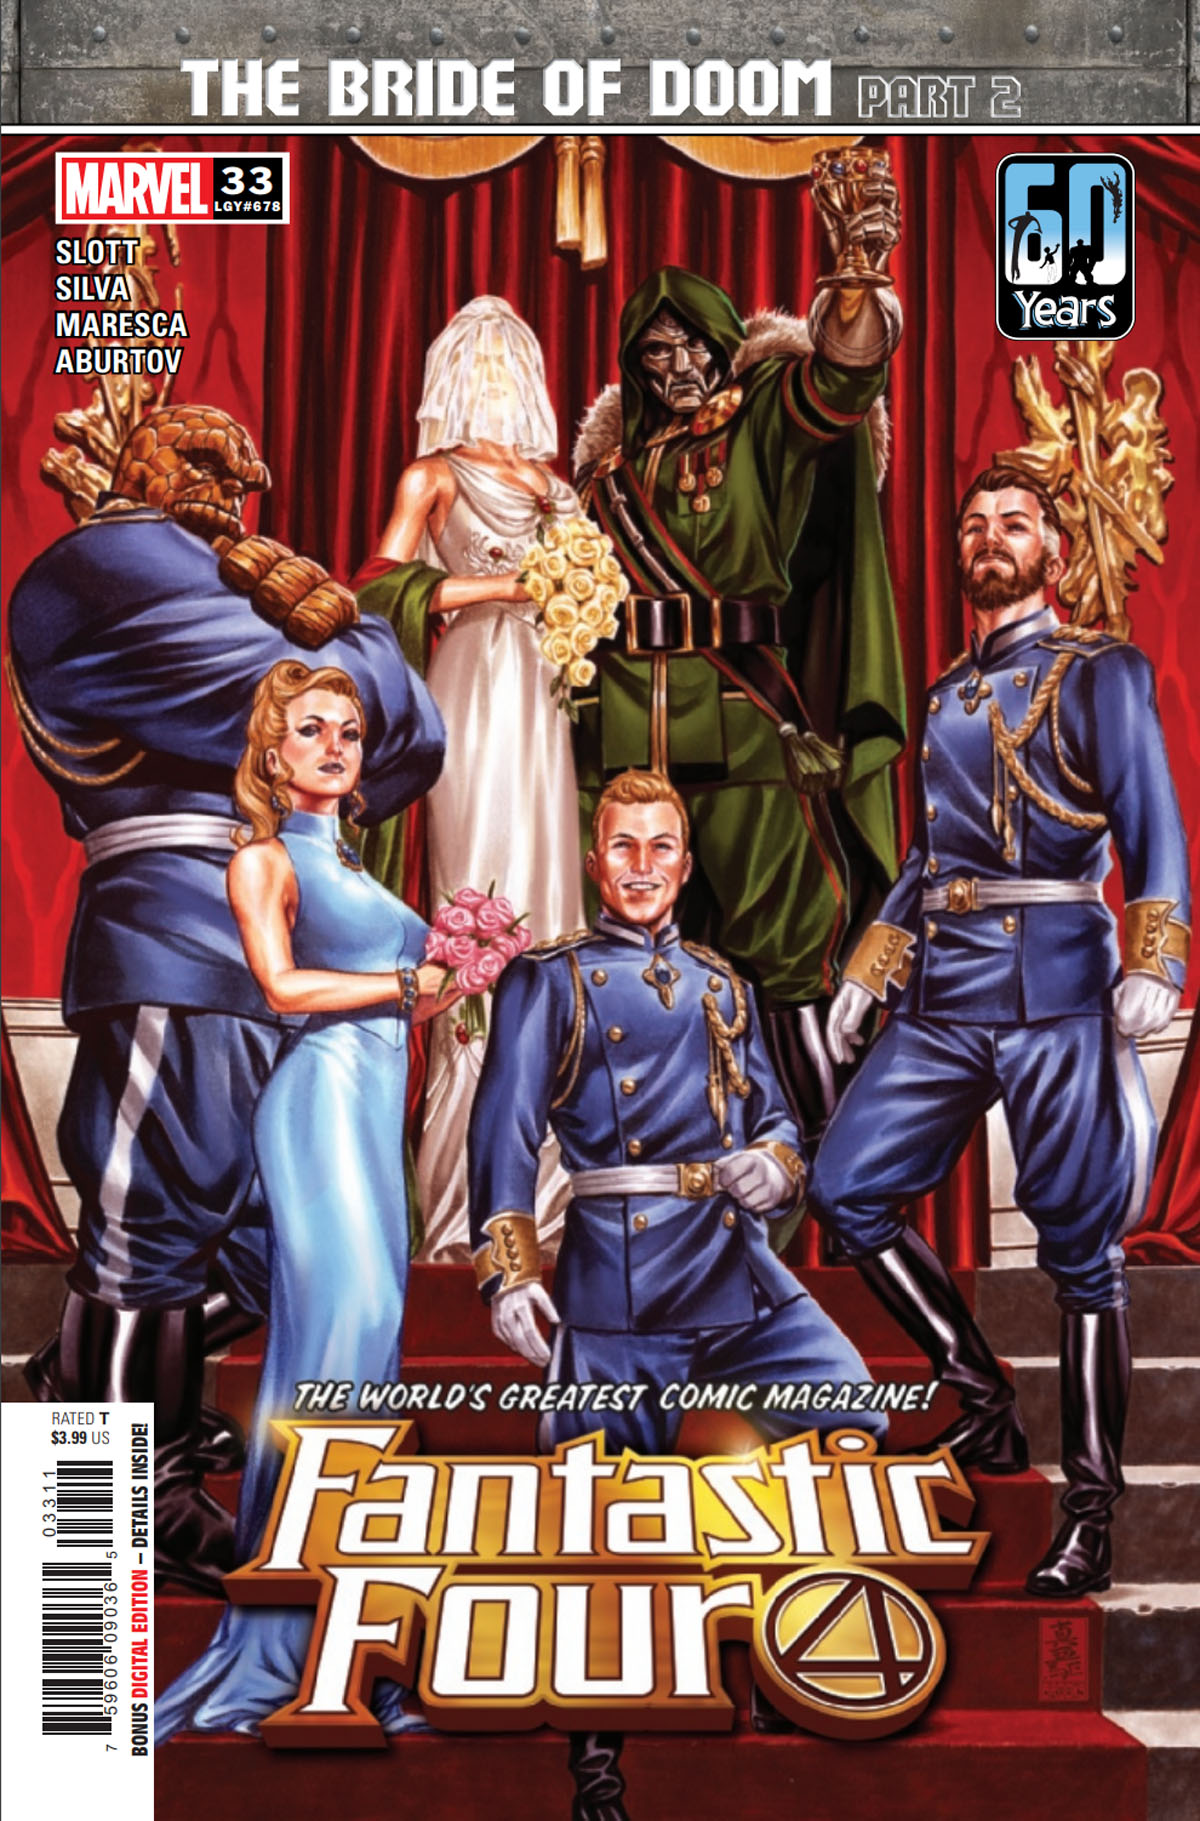 Fantastic Four #33 cover